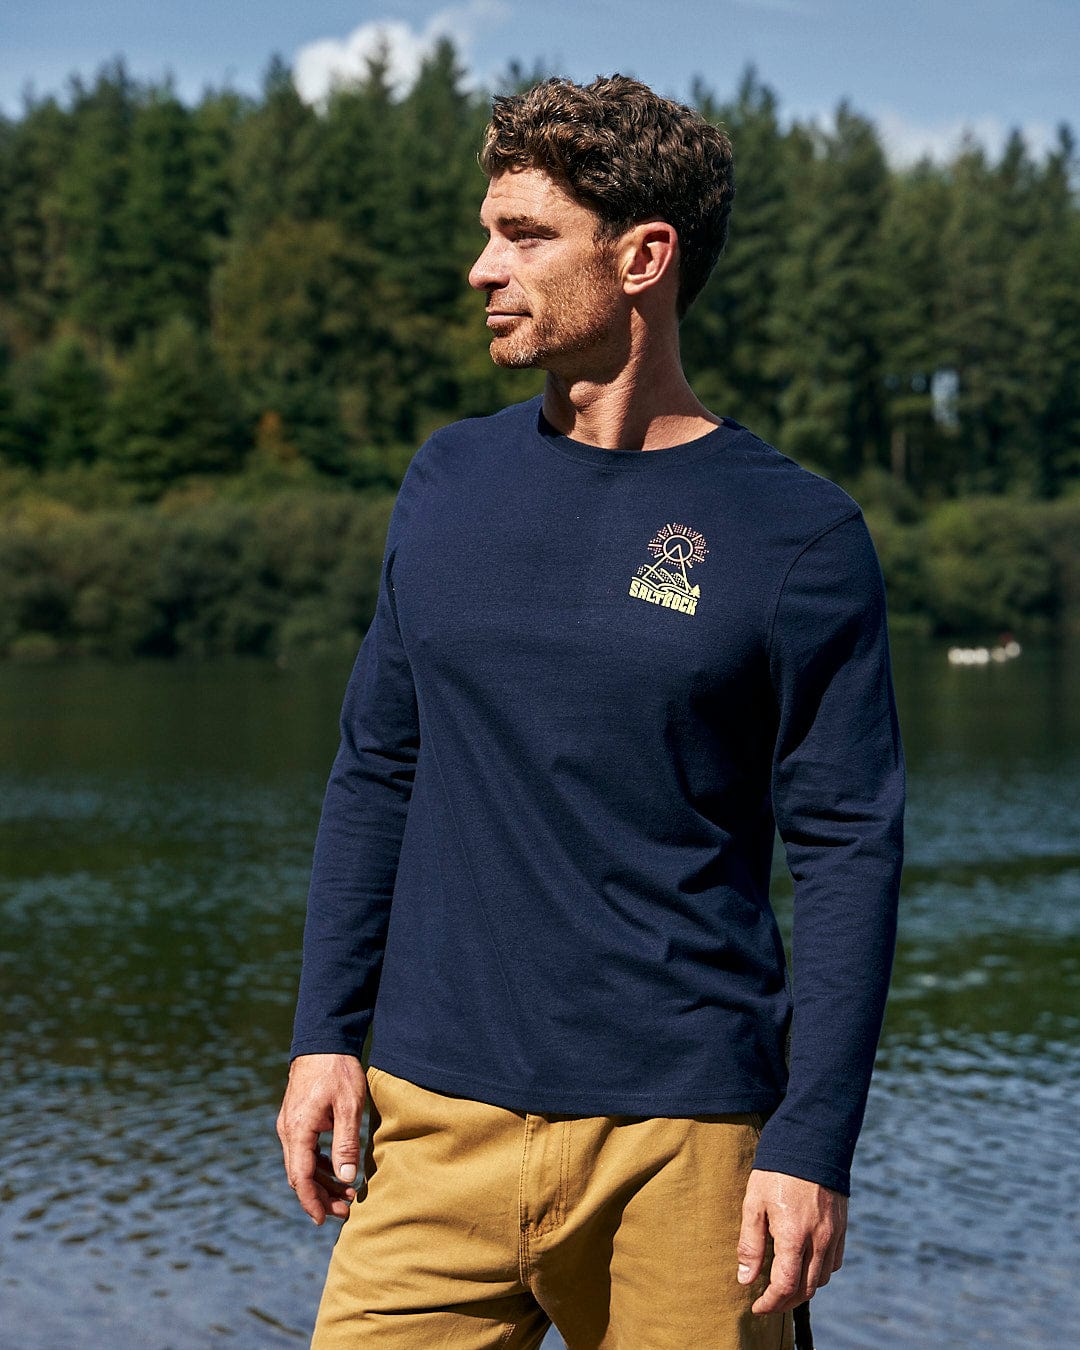 A man wearing a Saltrock Geo Peak - Mens Long Sleeve T-Shirt - Dark Blue standing by a lake.